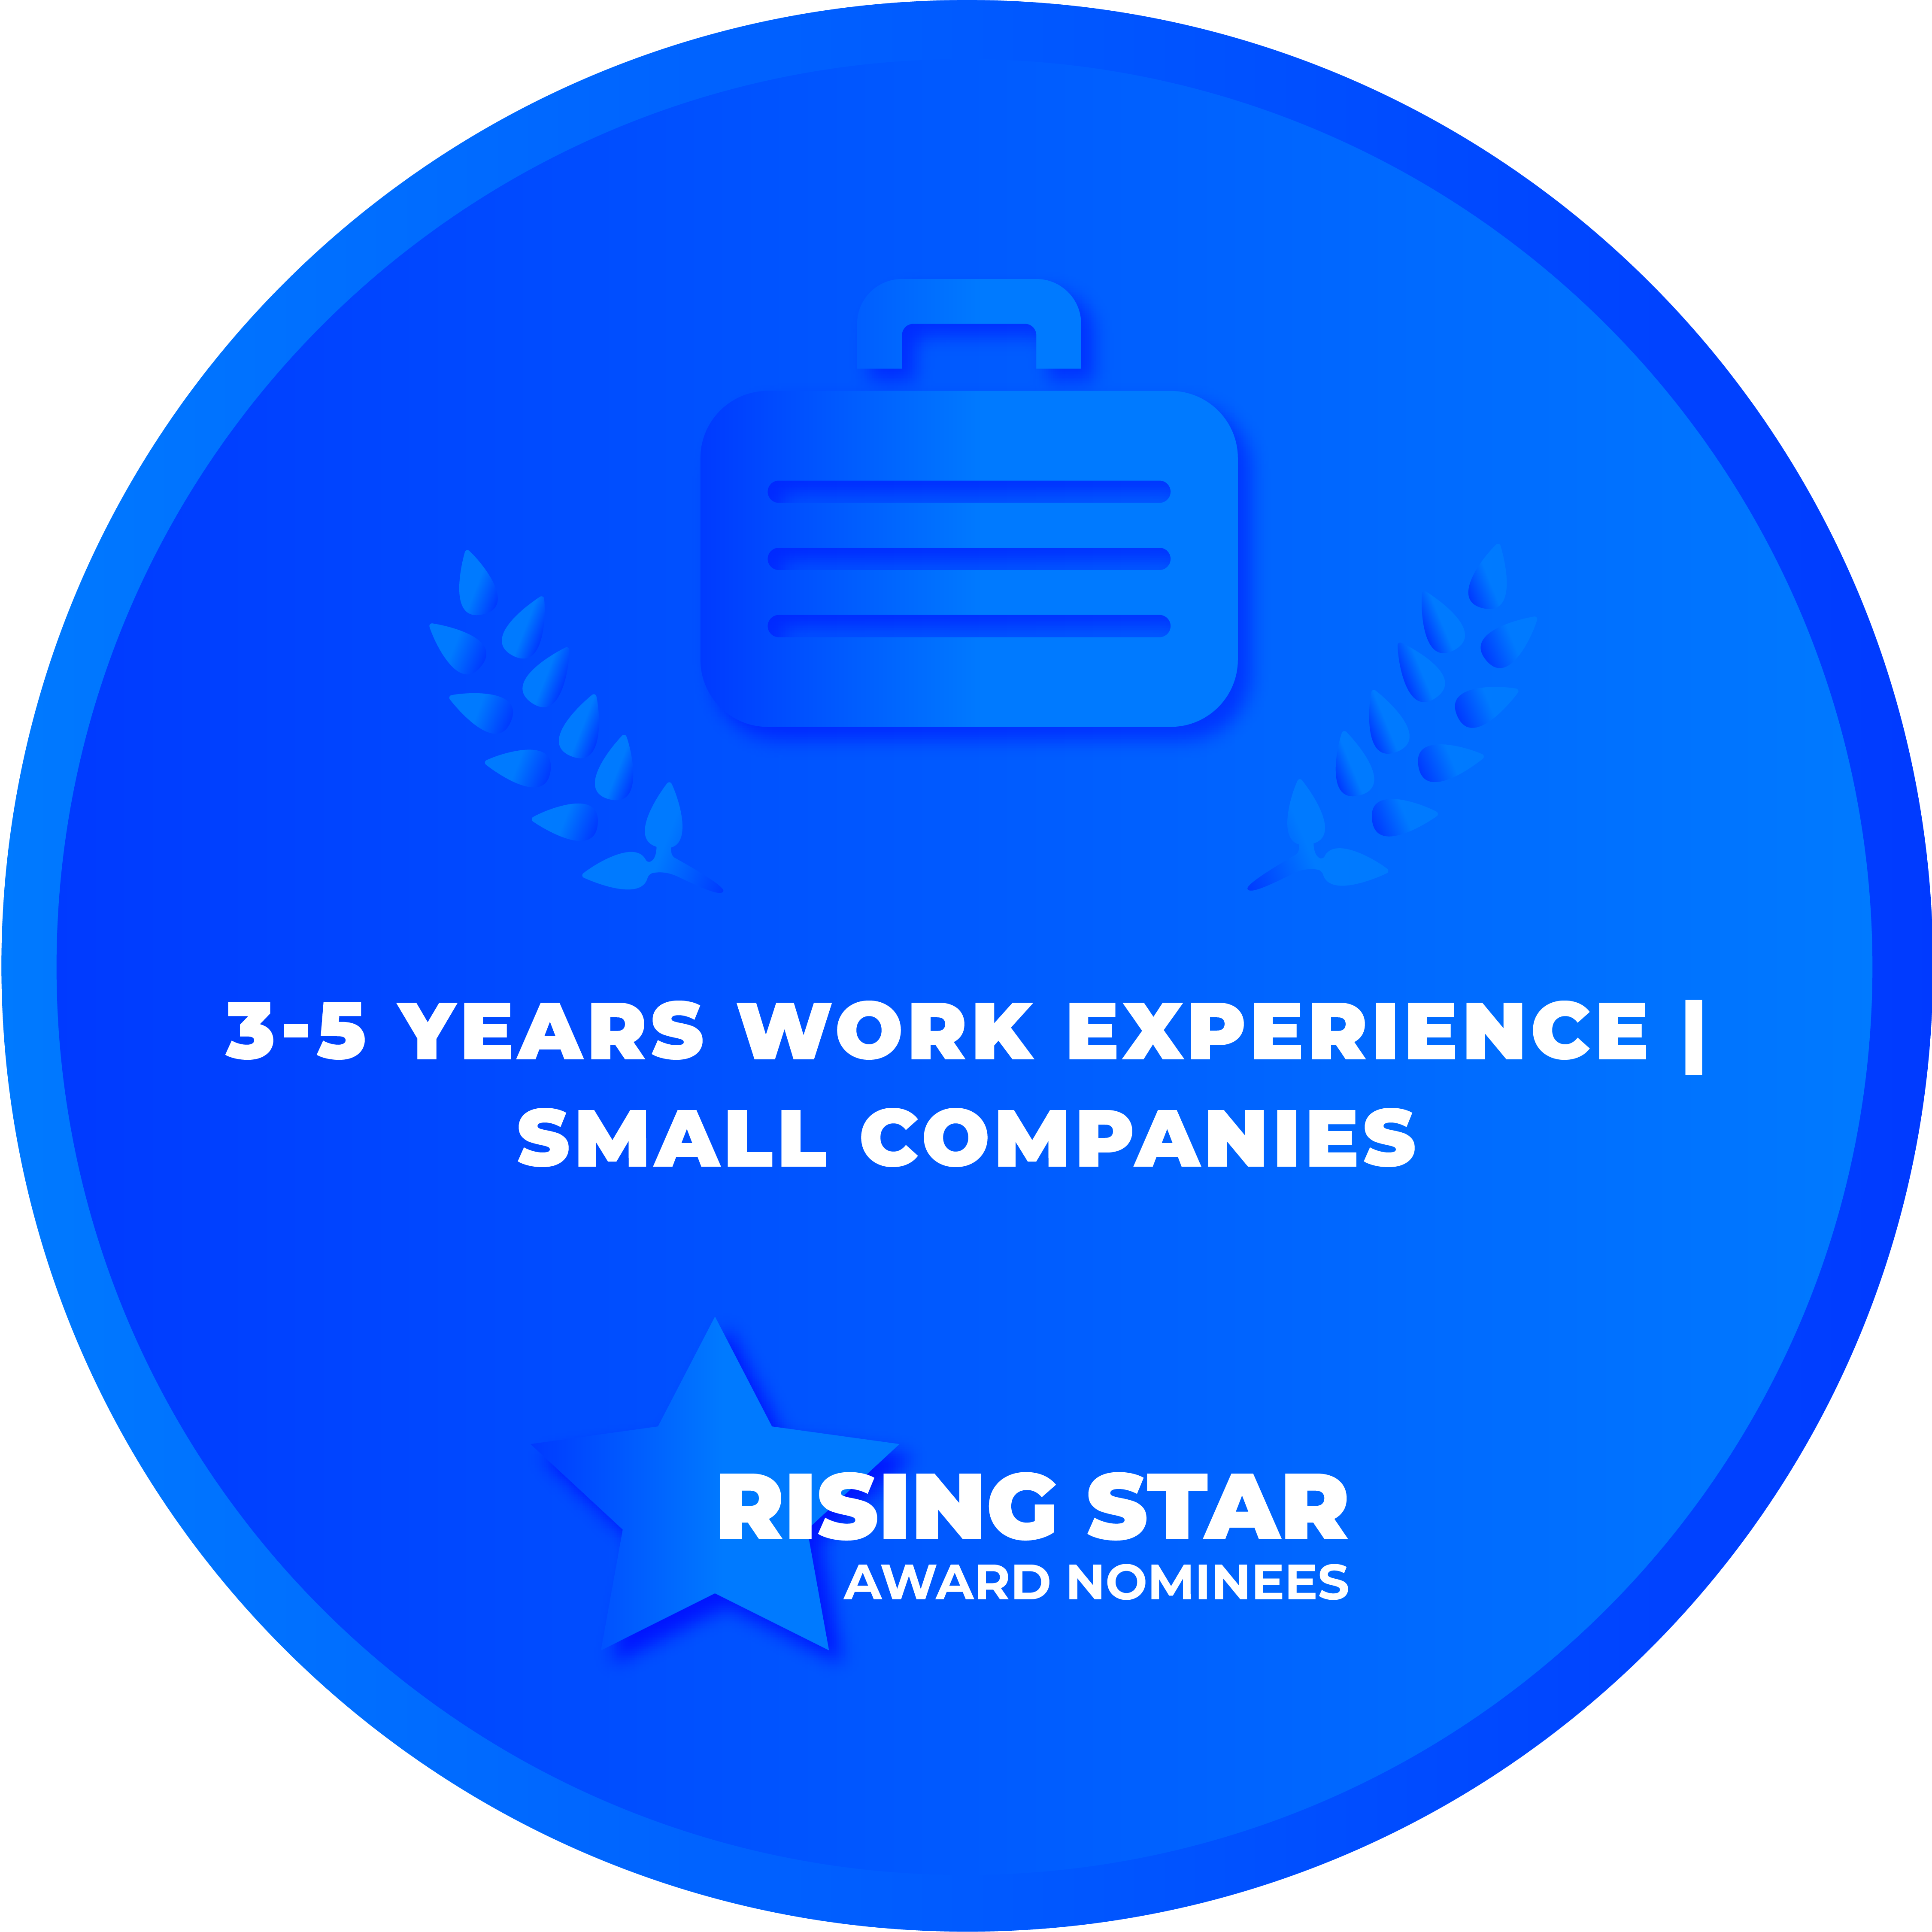 CRCA 2022 - RISING STAR AWARD - 3-5 Years Work Experience Small Companies